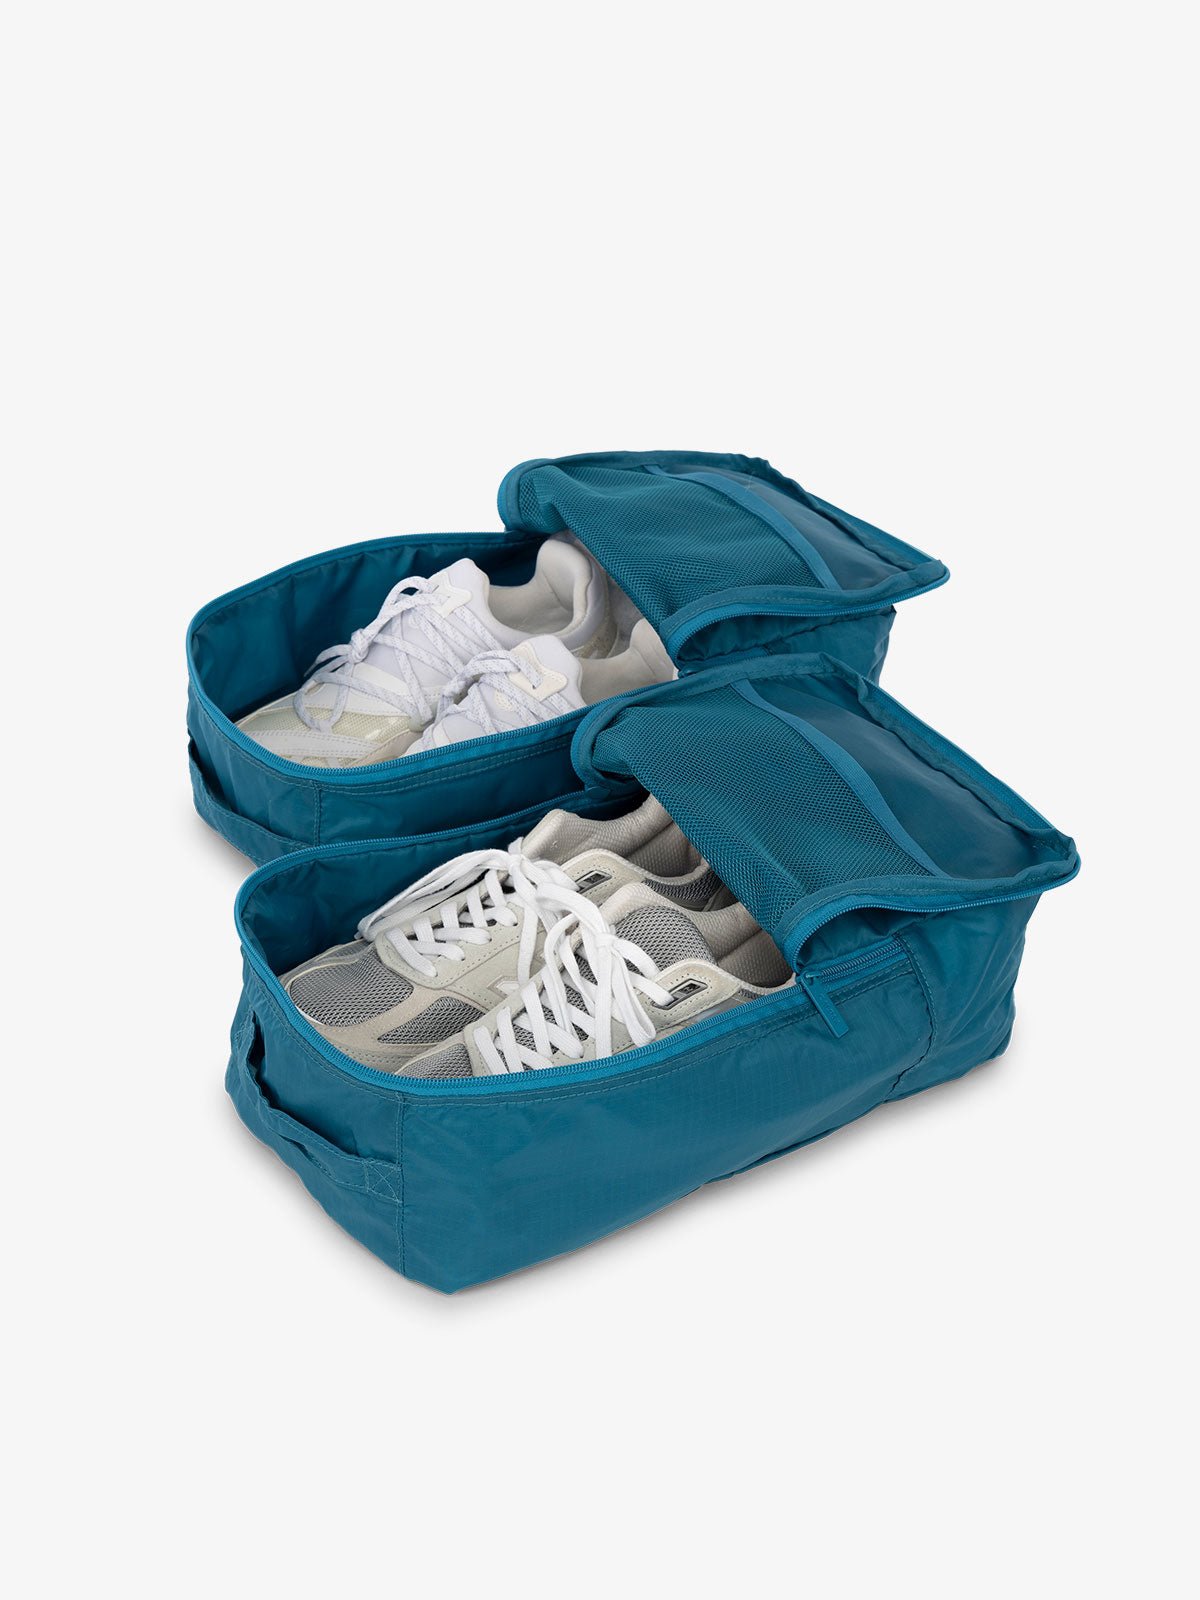 CALPAK Compakt shoe bag set with mesh pockets for travel in blue lagoon